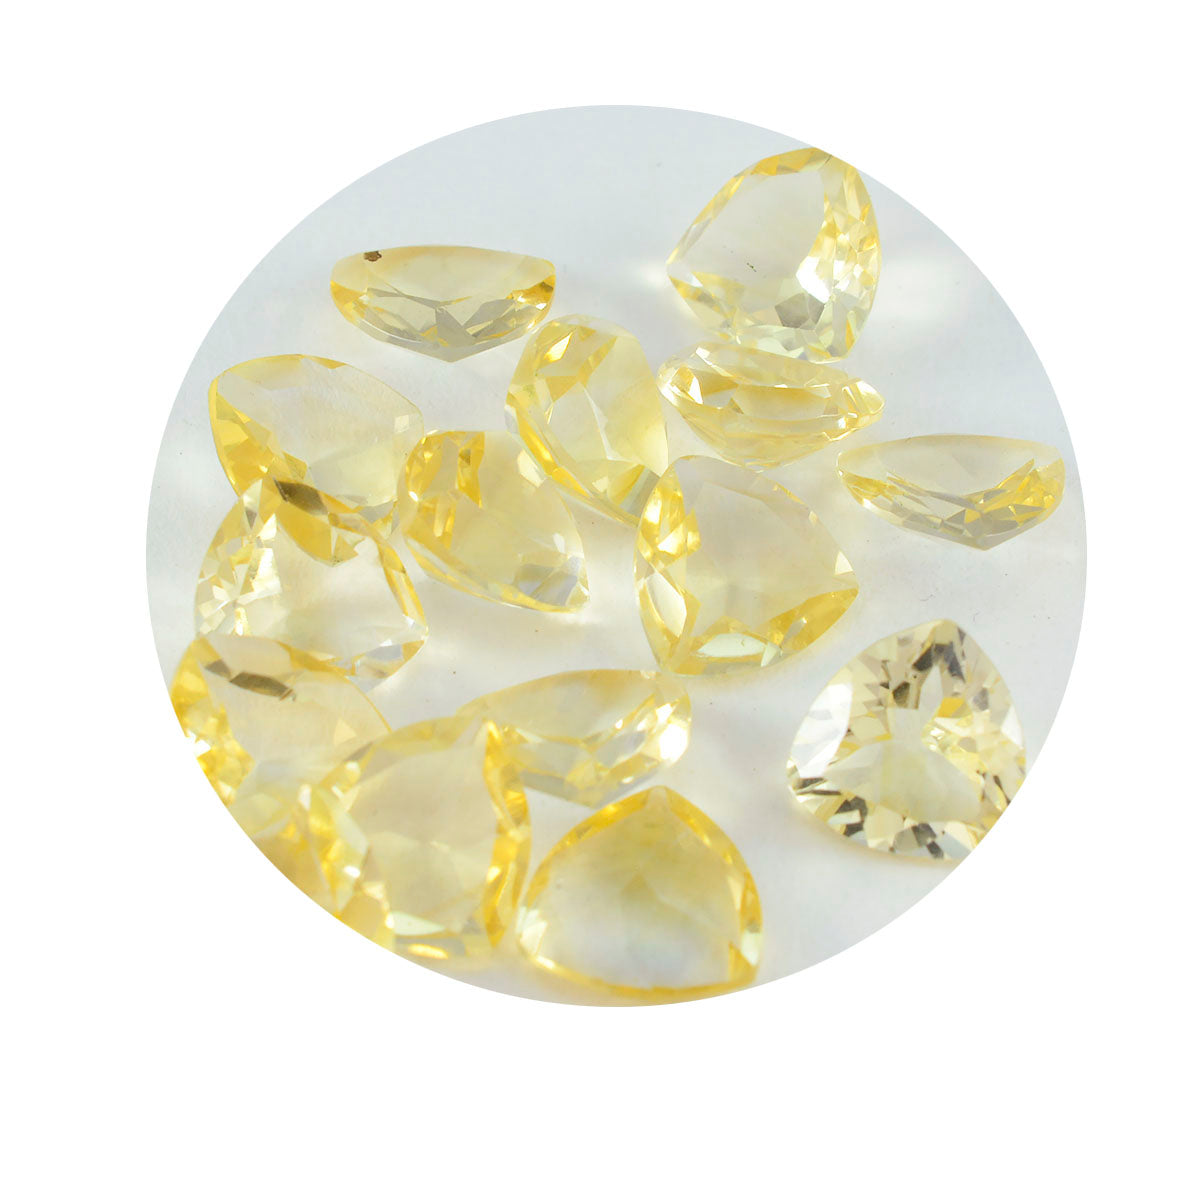 Riyogems 1PC echte gele citrien gefacetteerde 6x6 mm biljoen vorm mooie kwaliteitsedelsteen